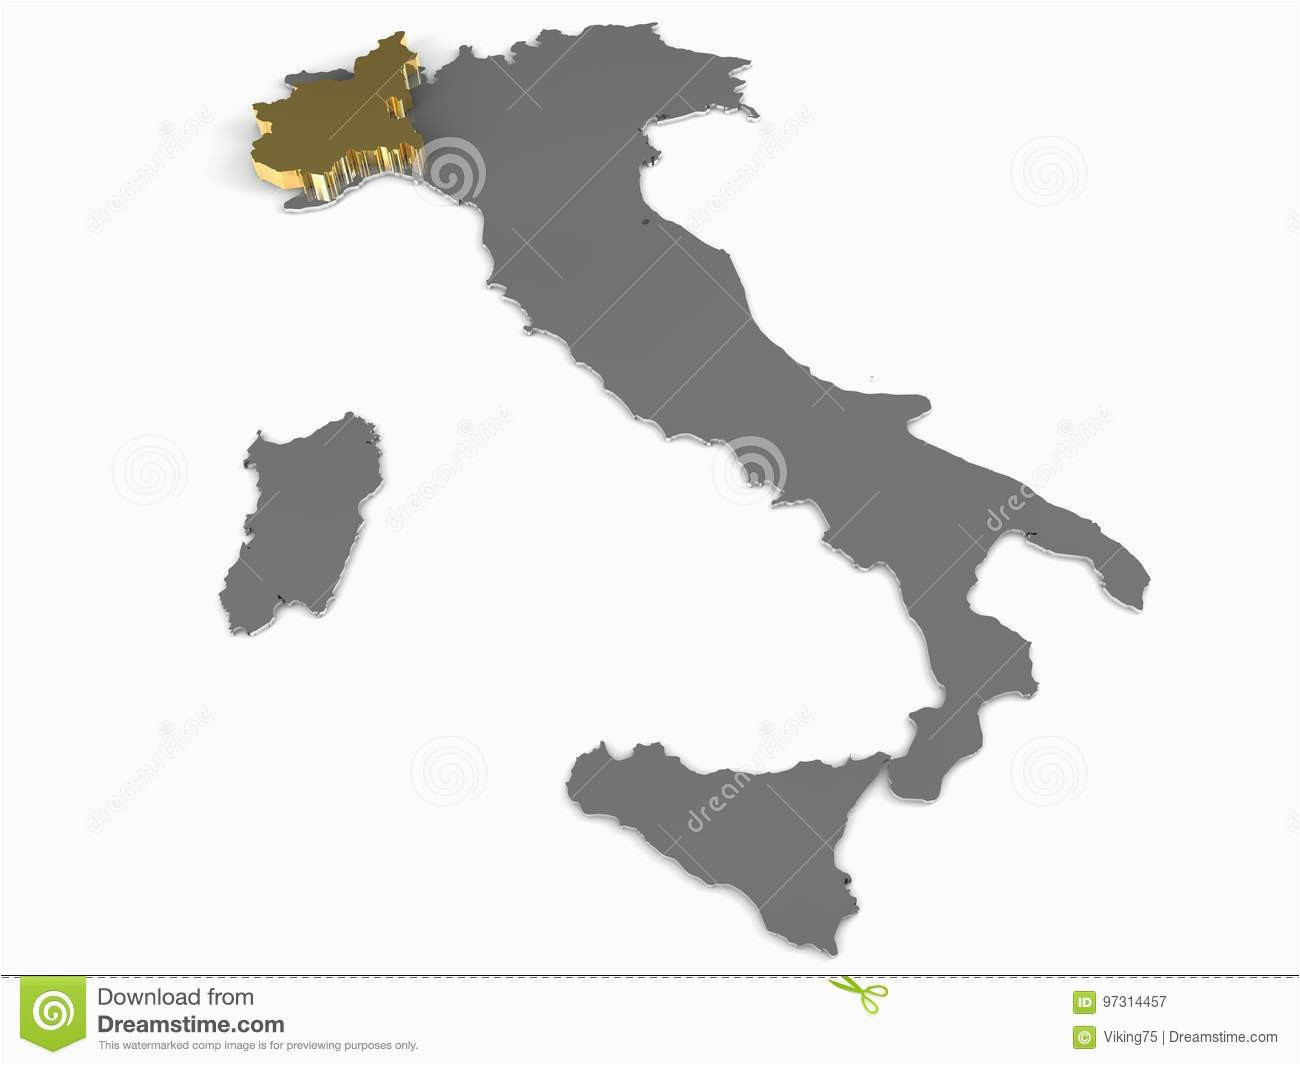 metallische karte italiens 3d whith piemonte region hervorgehoben